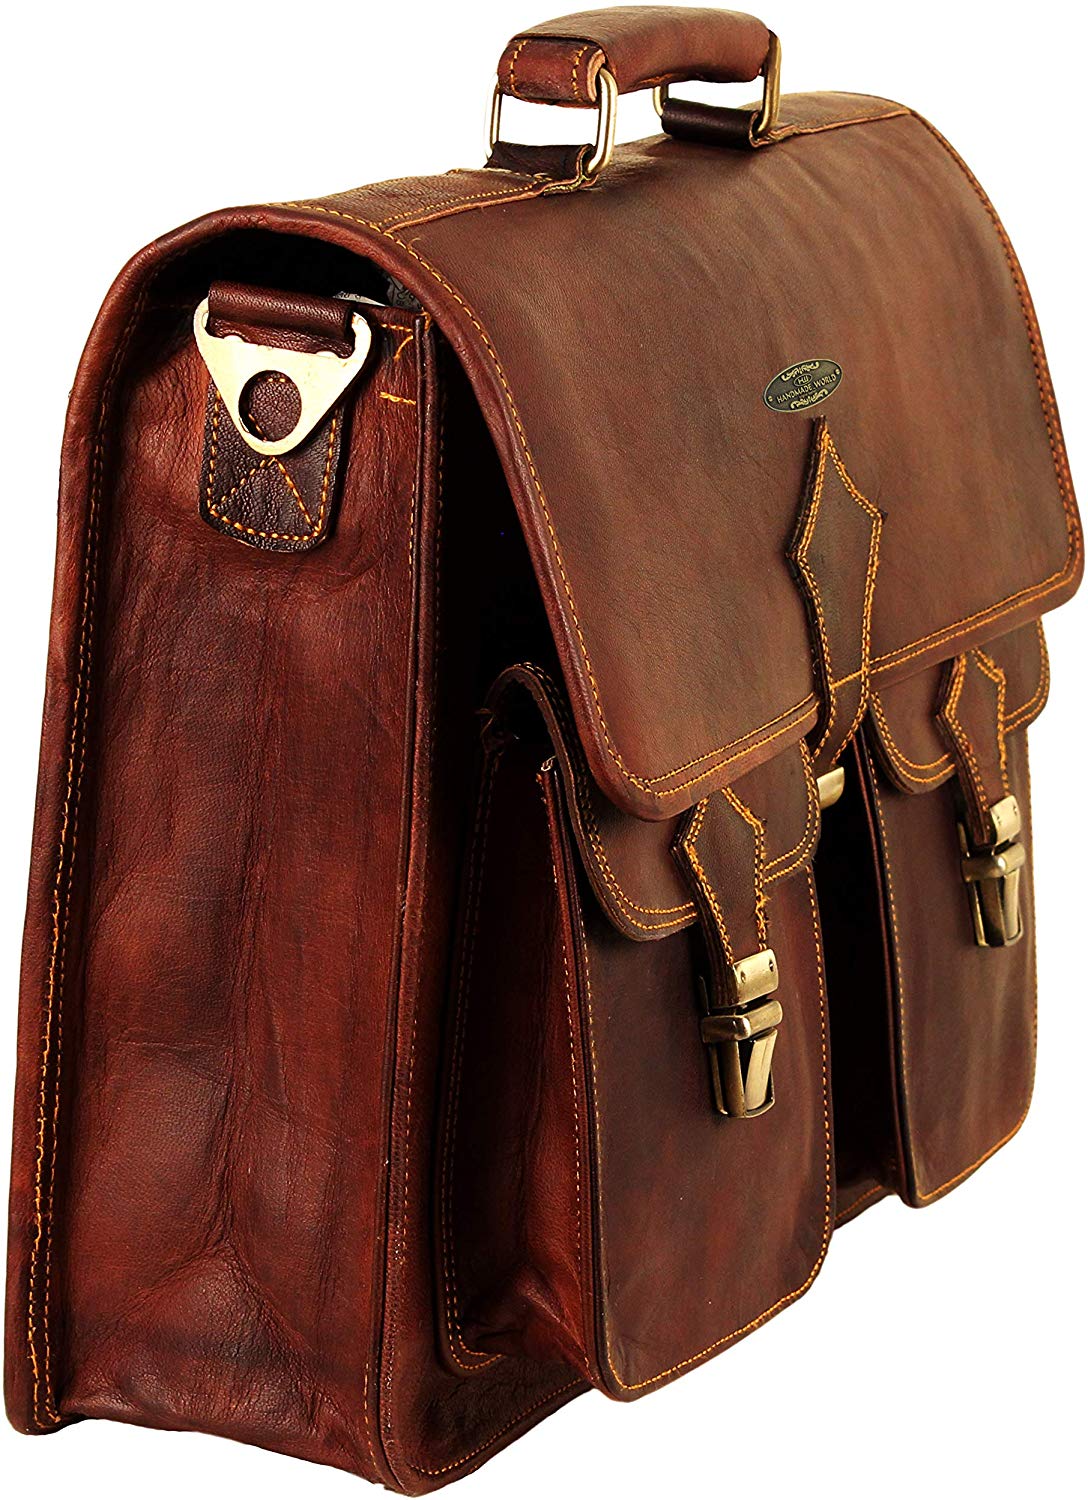 Genuine Leather Messenger Bag with Top Handle and Adjustable Shoulder Strap by Hulsh